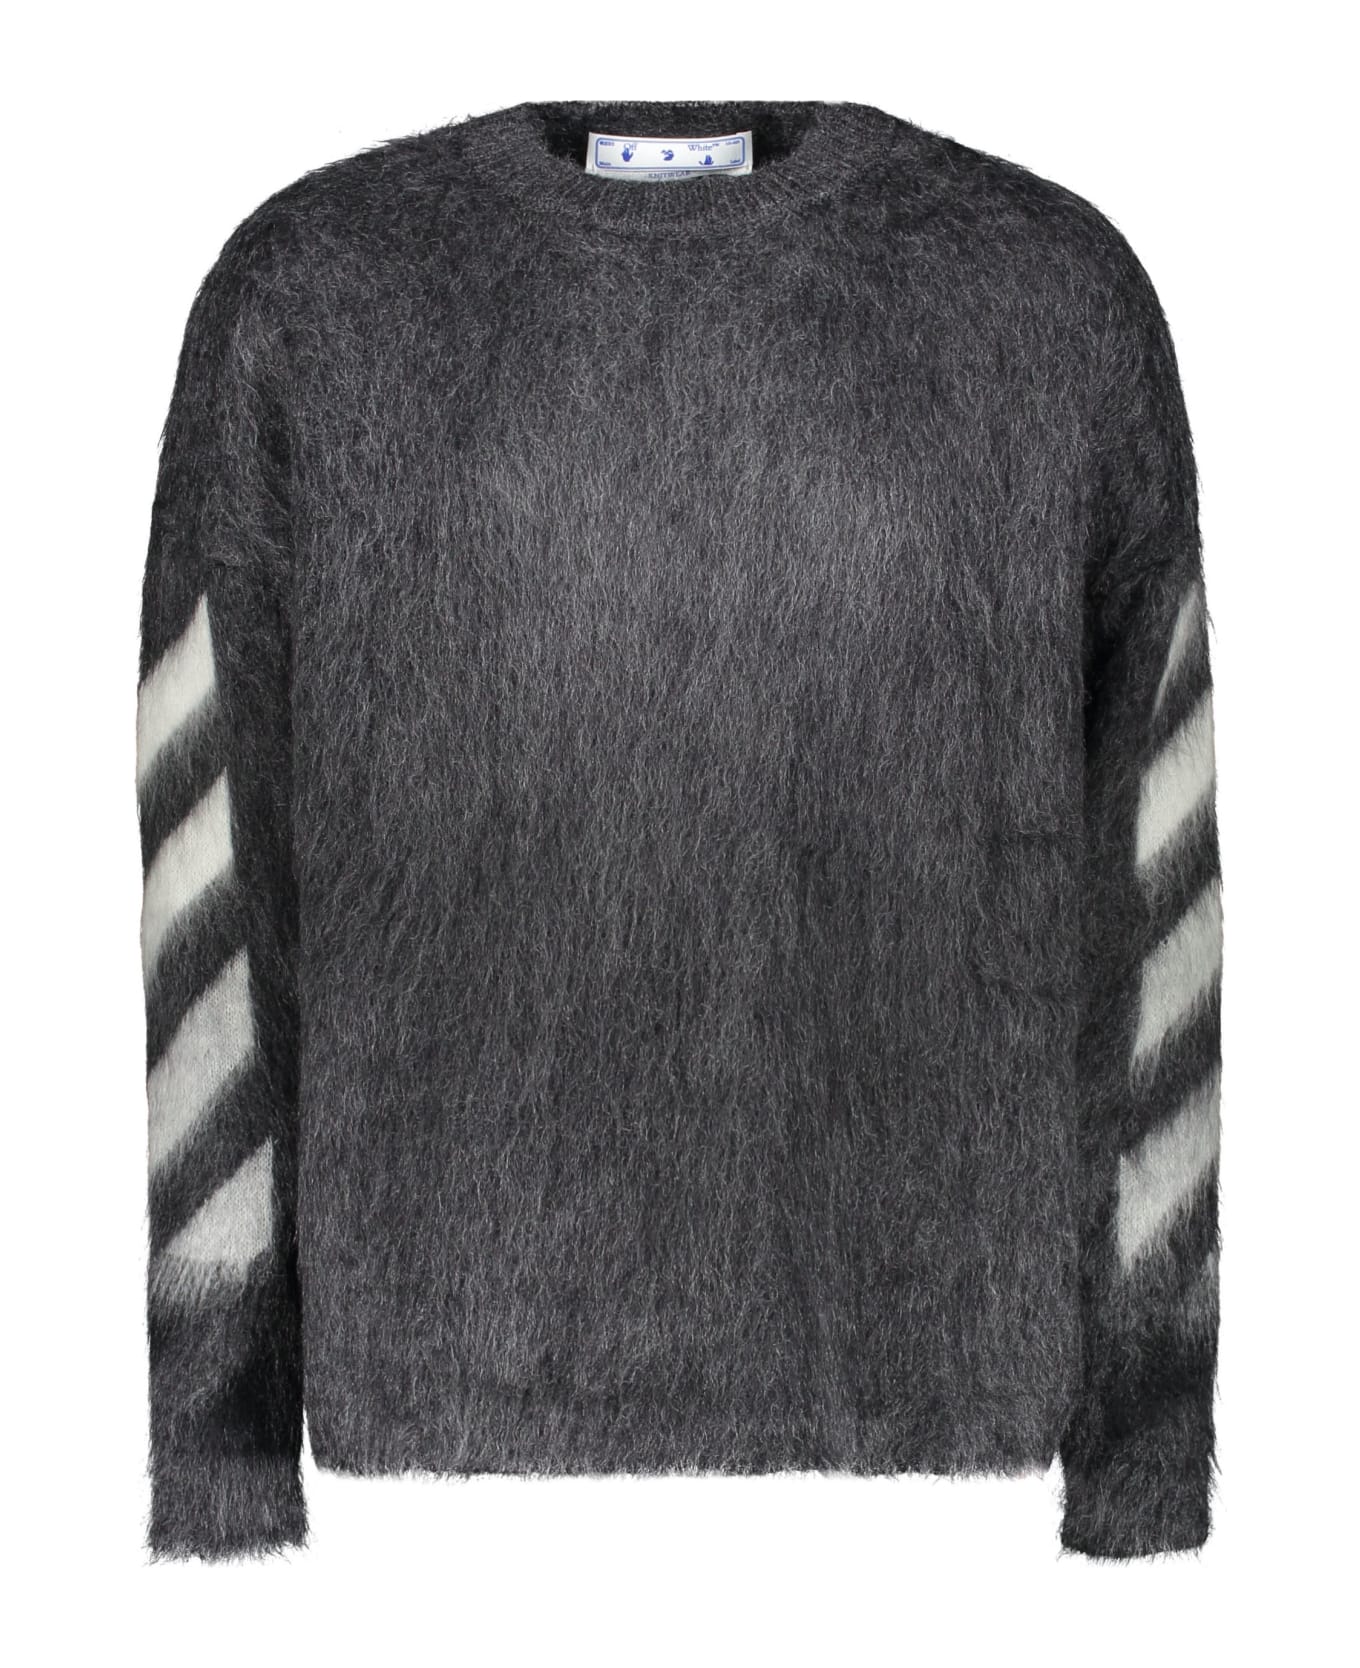 Off-White Long Sleeve Crew-neck Sweater - heather grey